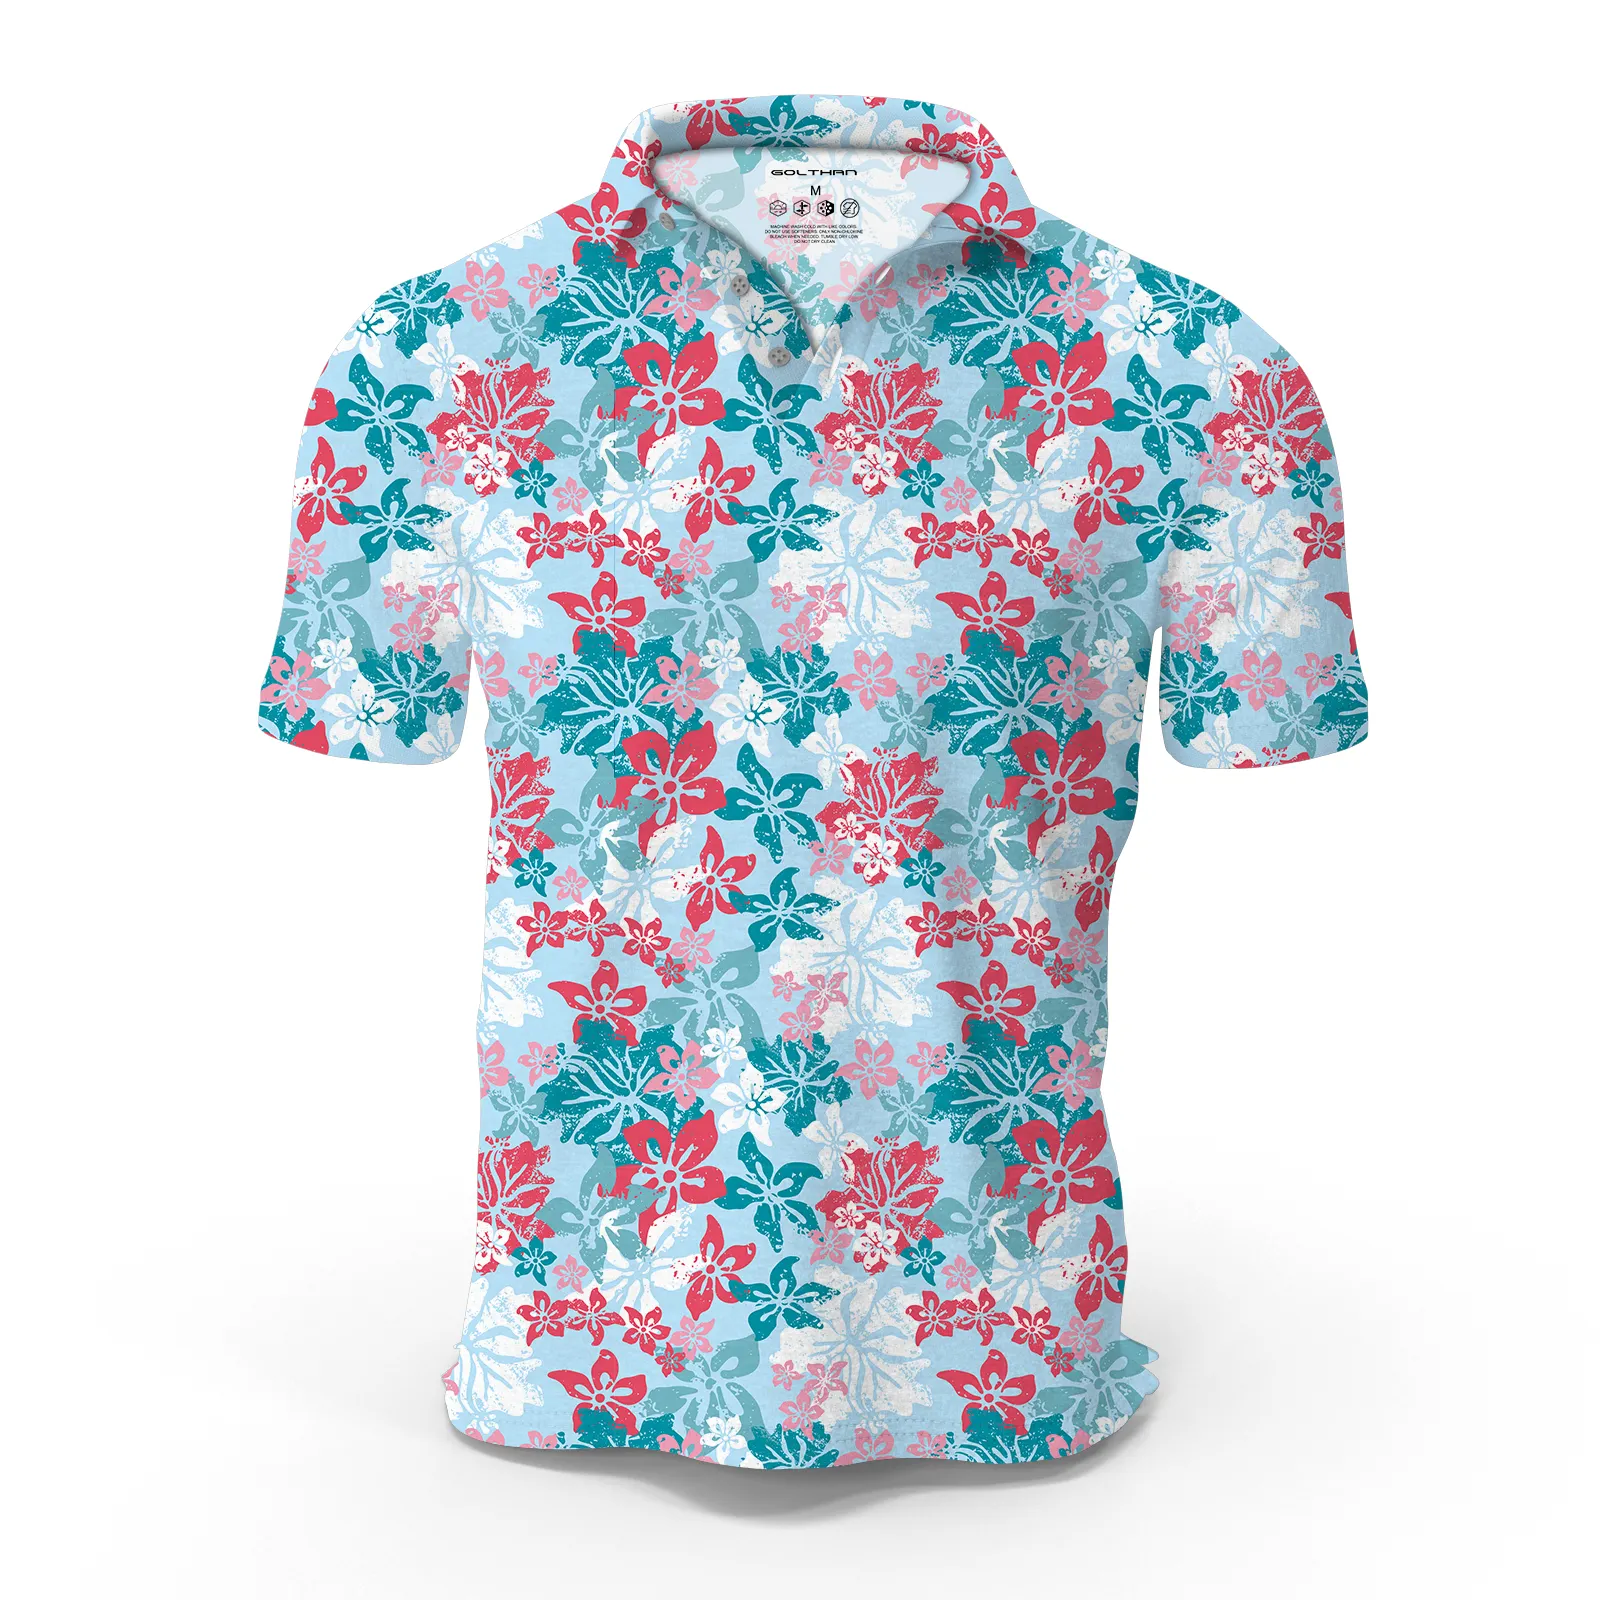 Oem Grafische Full Printing Merk Kwaliteit Polyester Golfpolo T-Shirt Snel Droog Getailleerd Heren Workout T-Shirt Zonder Zak